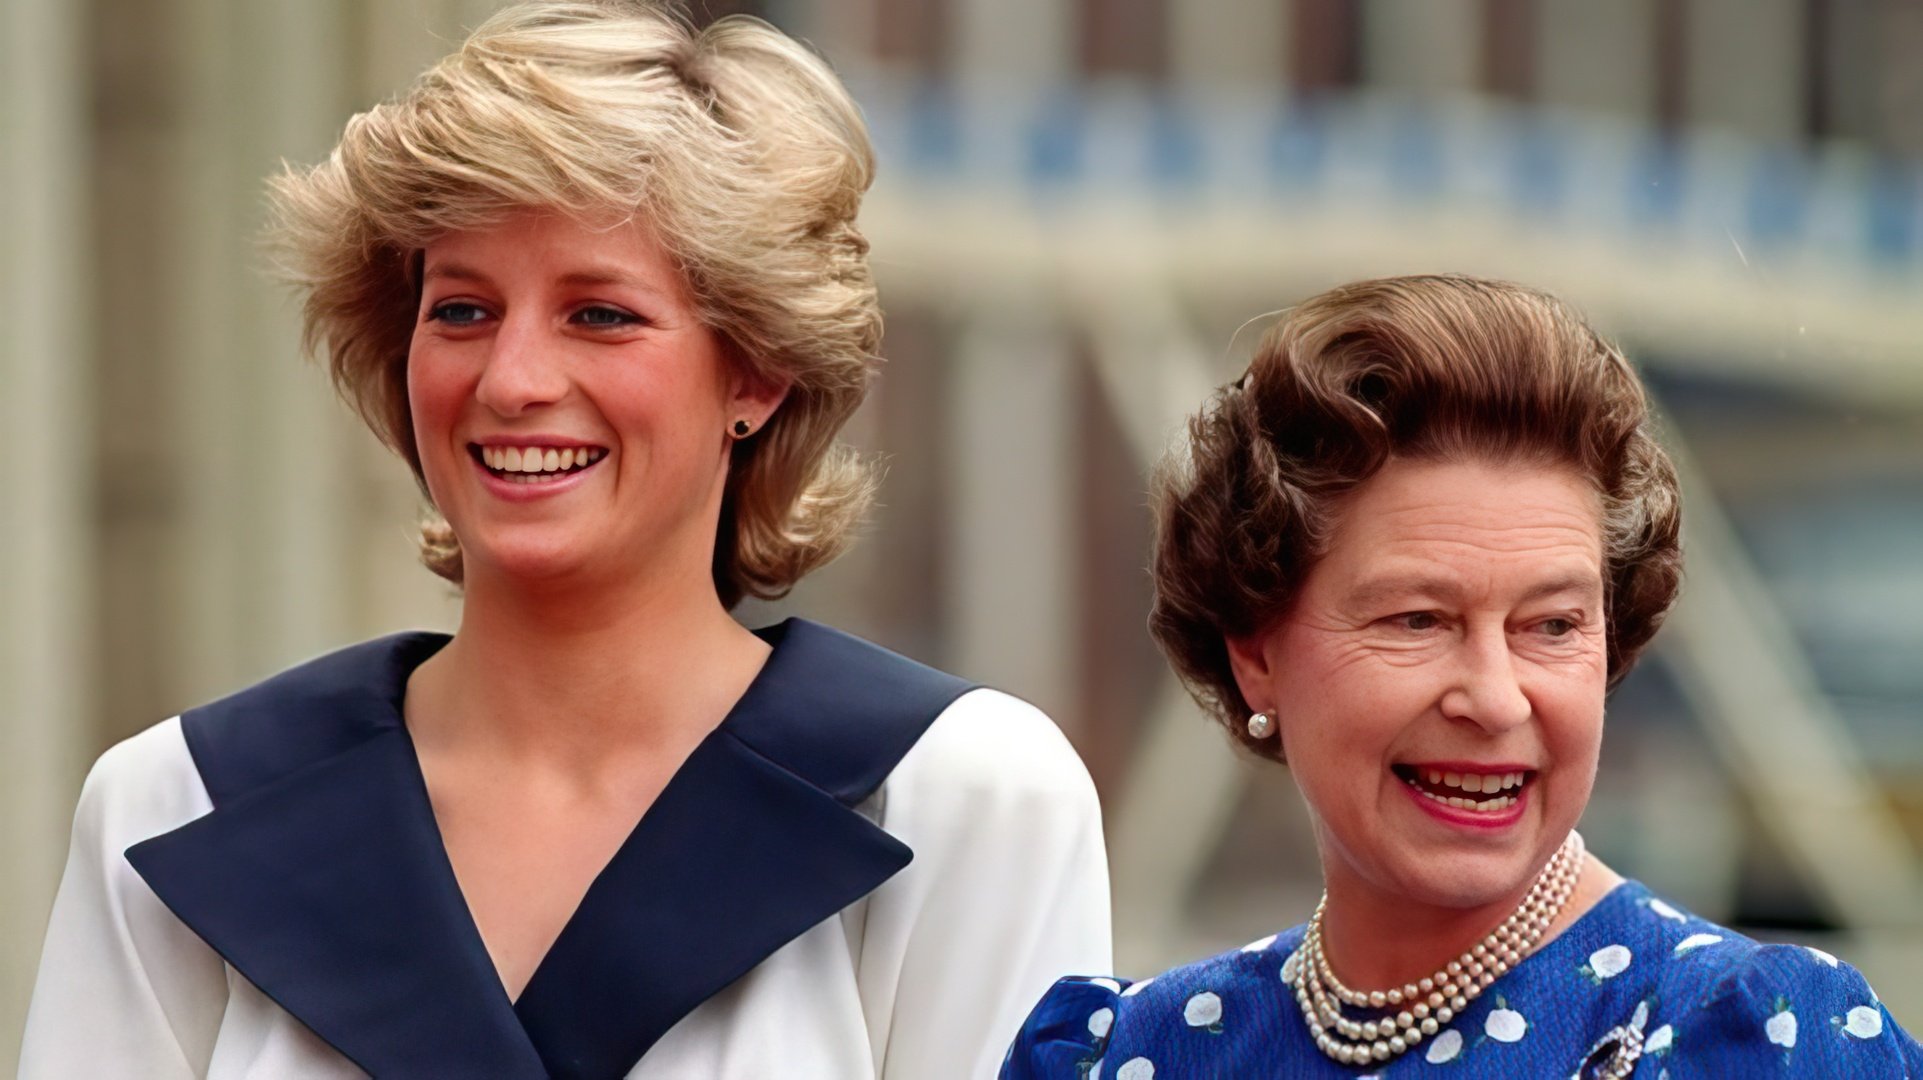 Princess Diana and Queen Elizabeth II